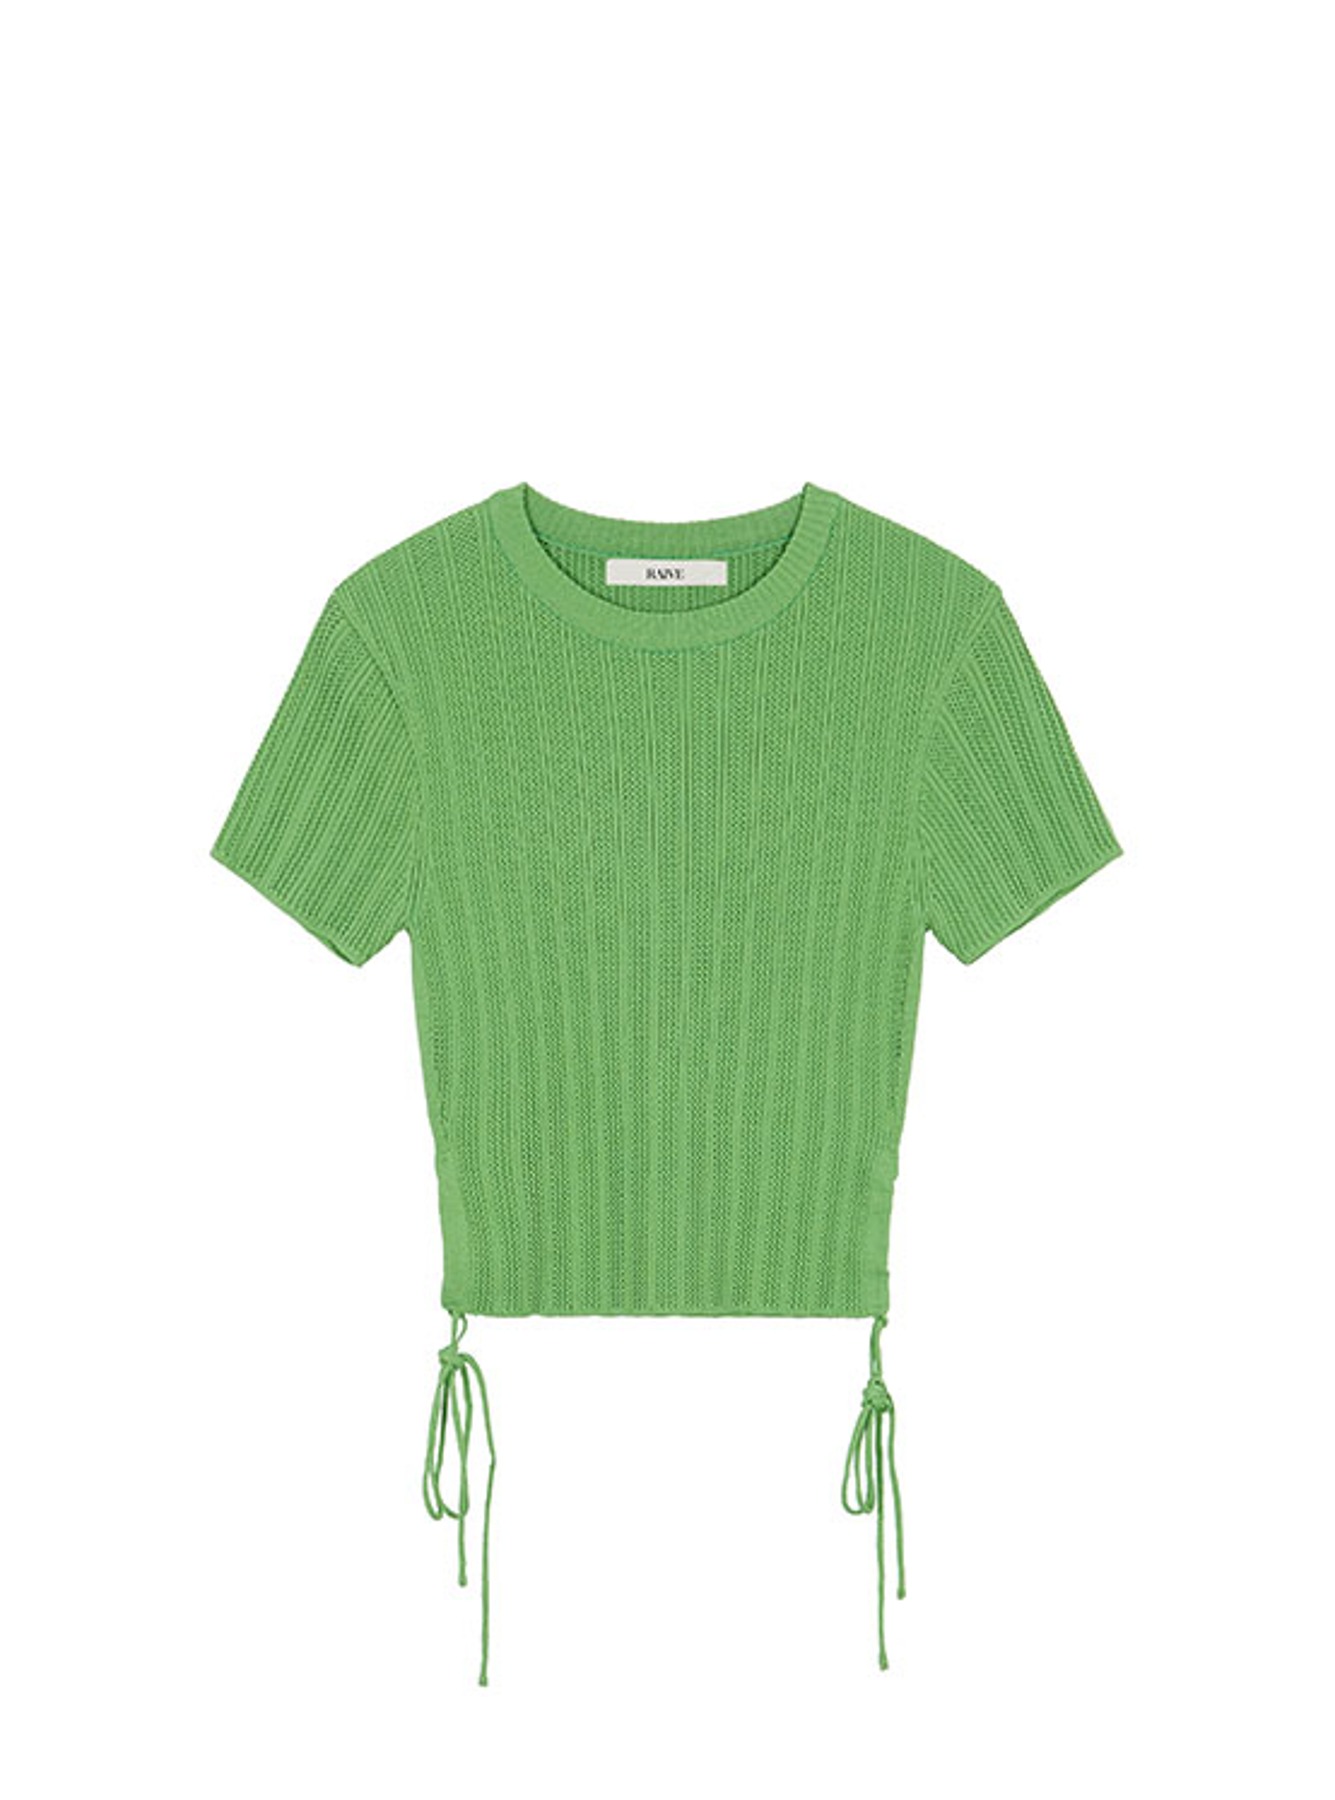 Waist String Knit in Green VK3MP152-32